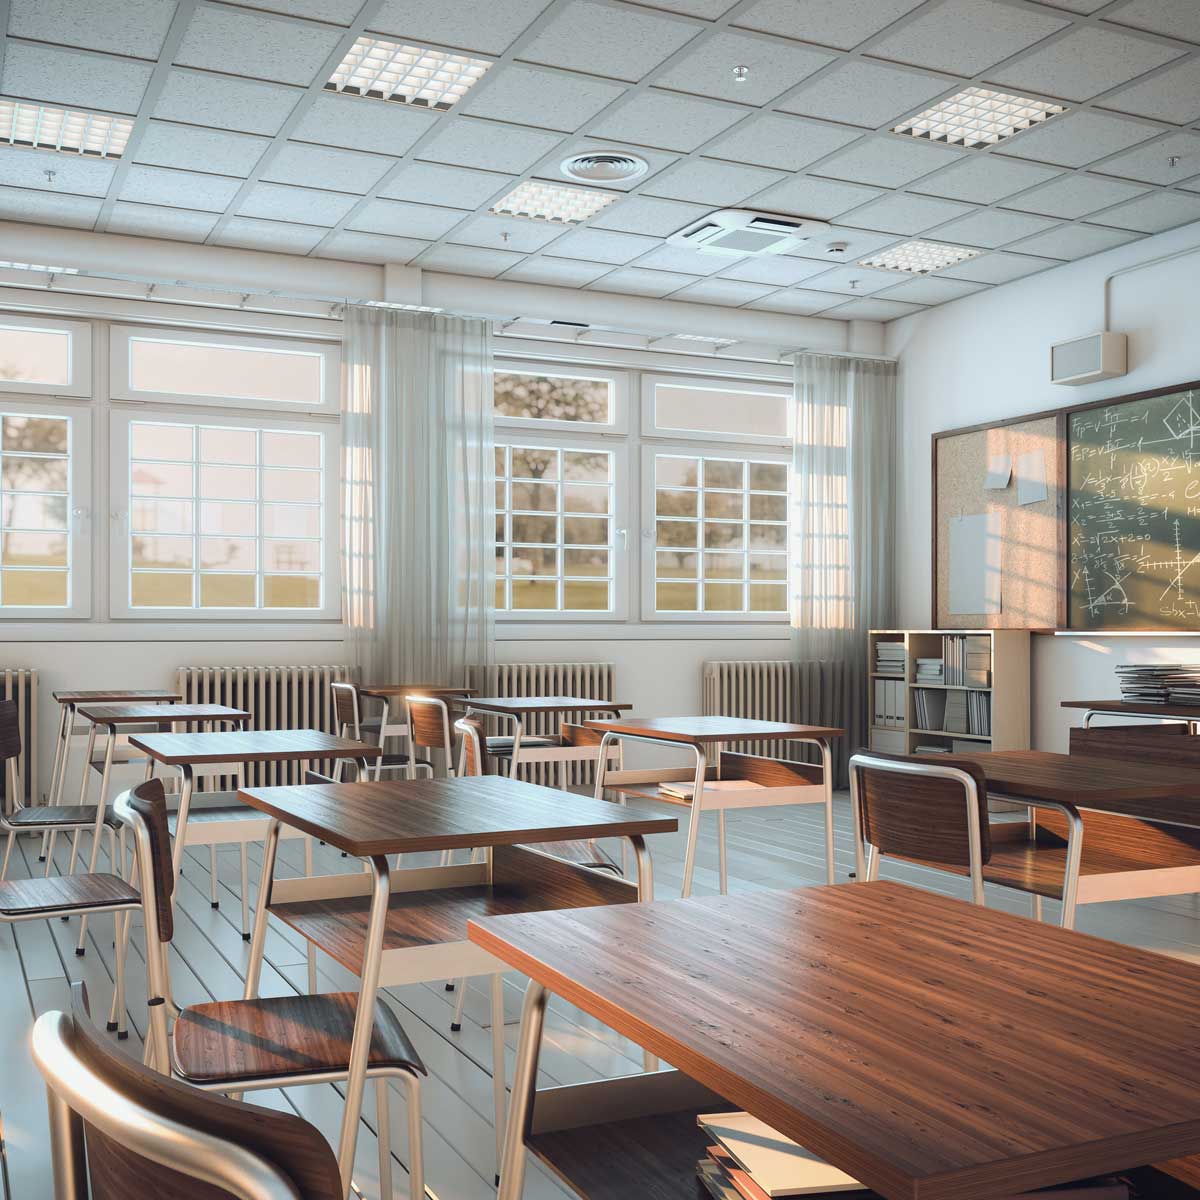 interior of an empty school classroom